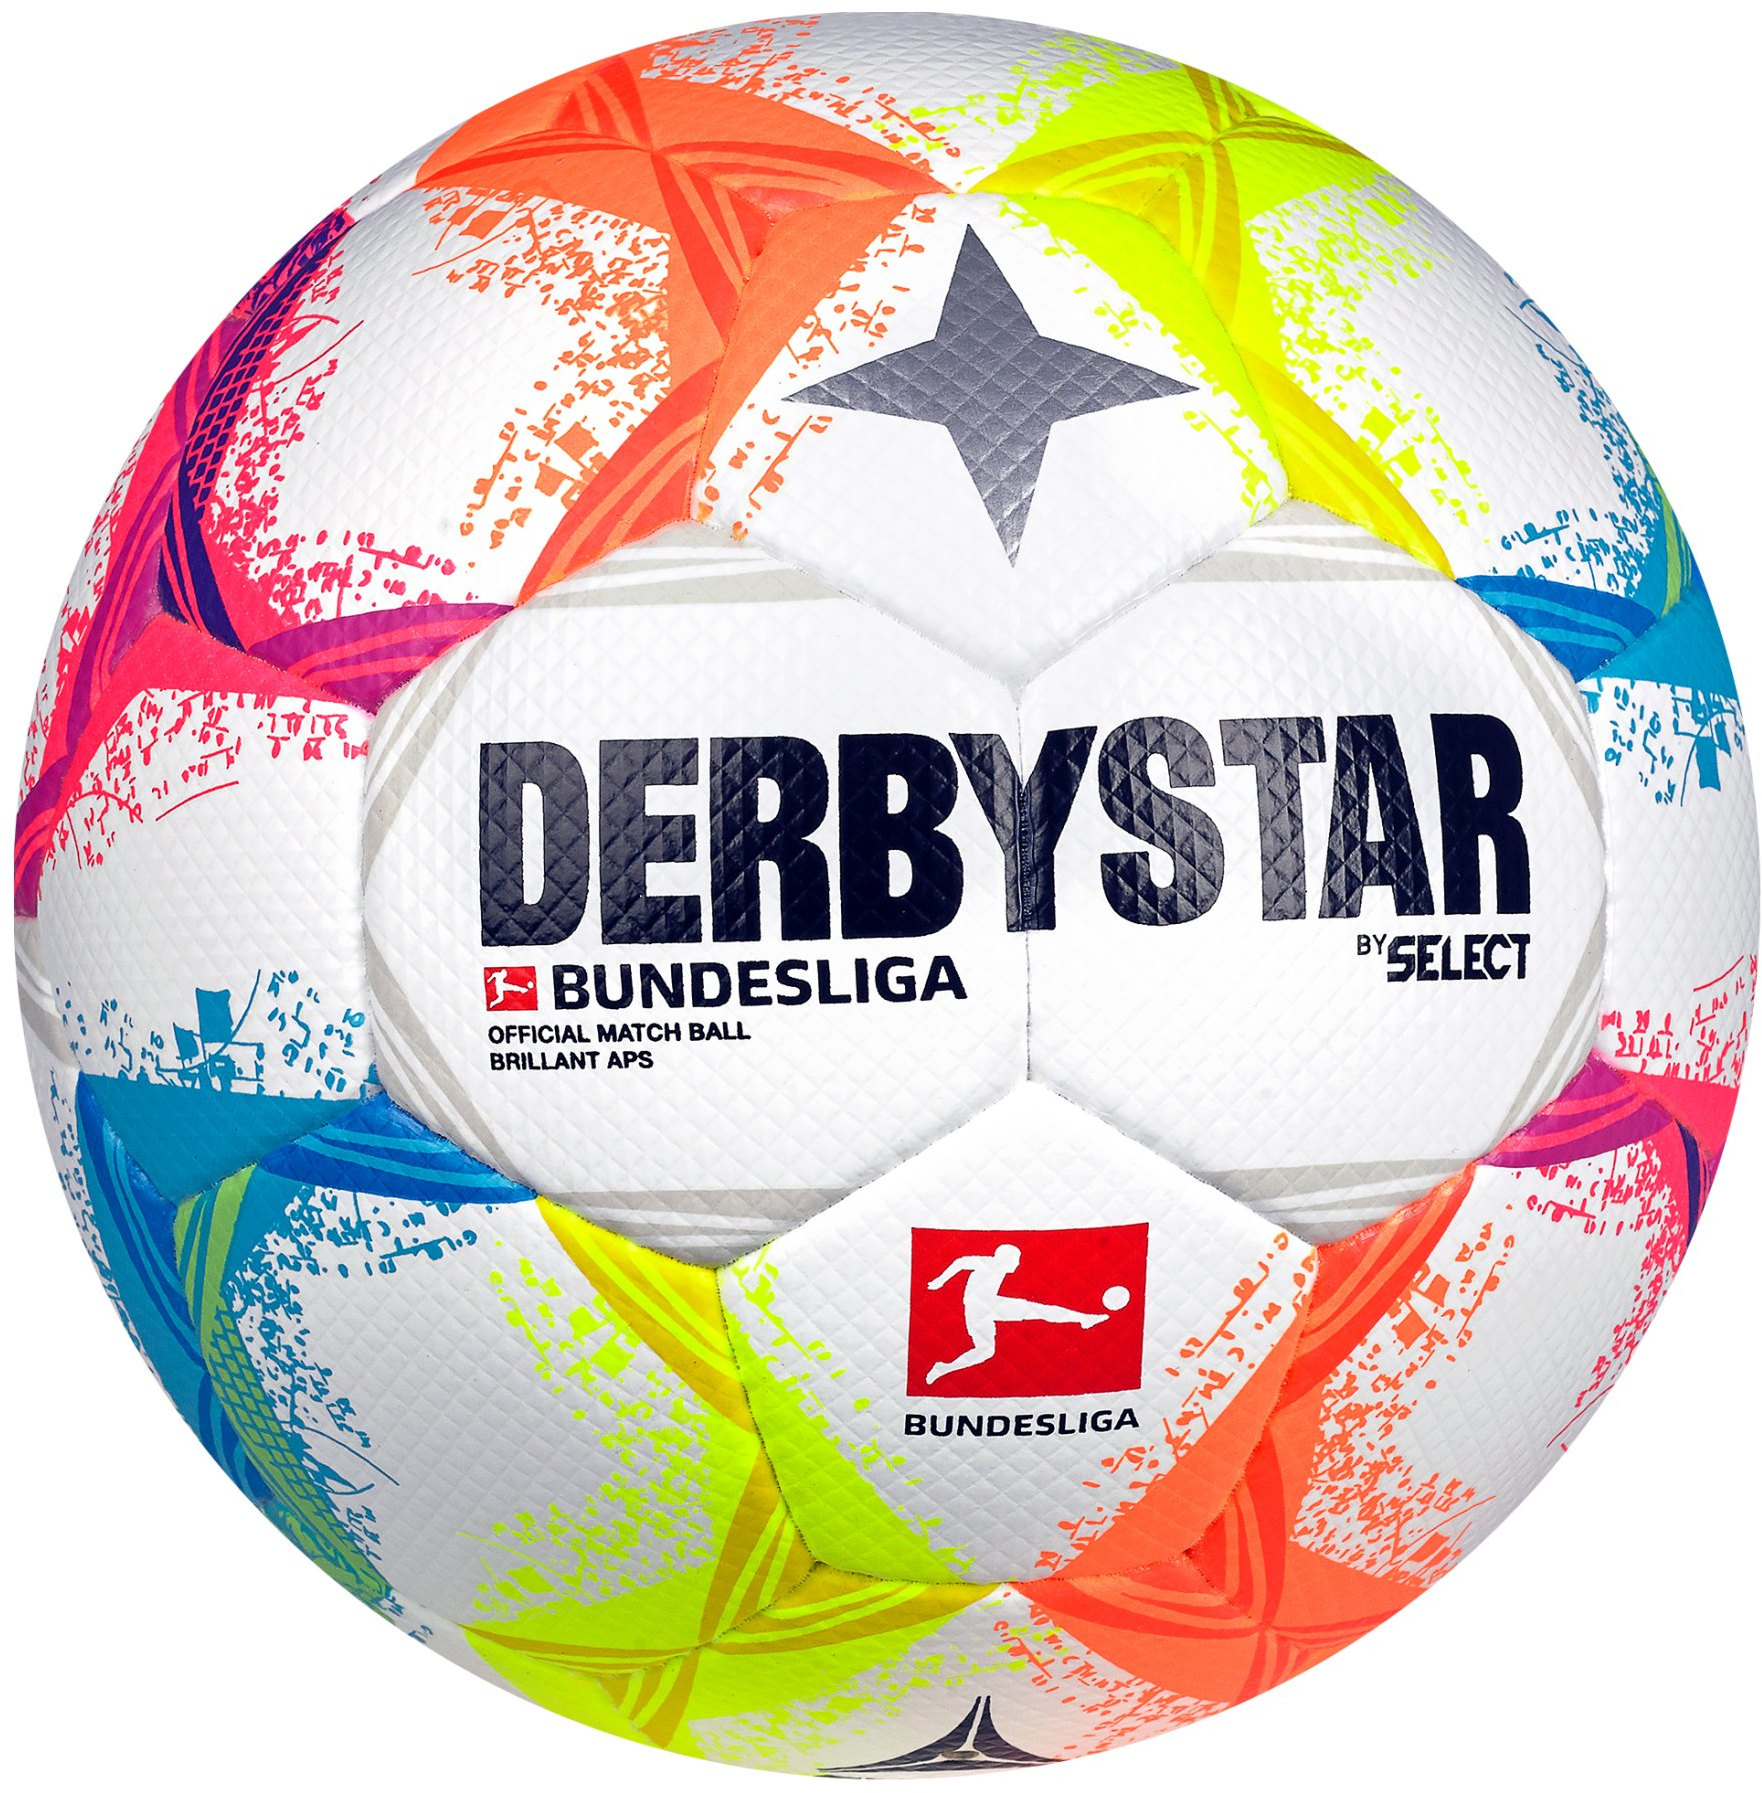 Derbystar Bundesliga Brillant APS v22 Match ball Labda